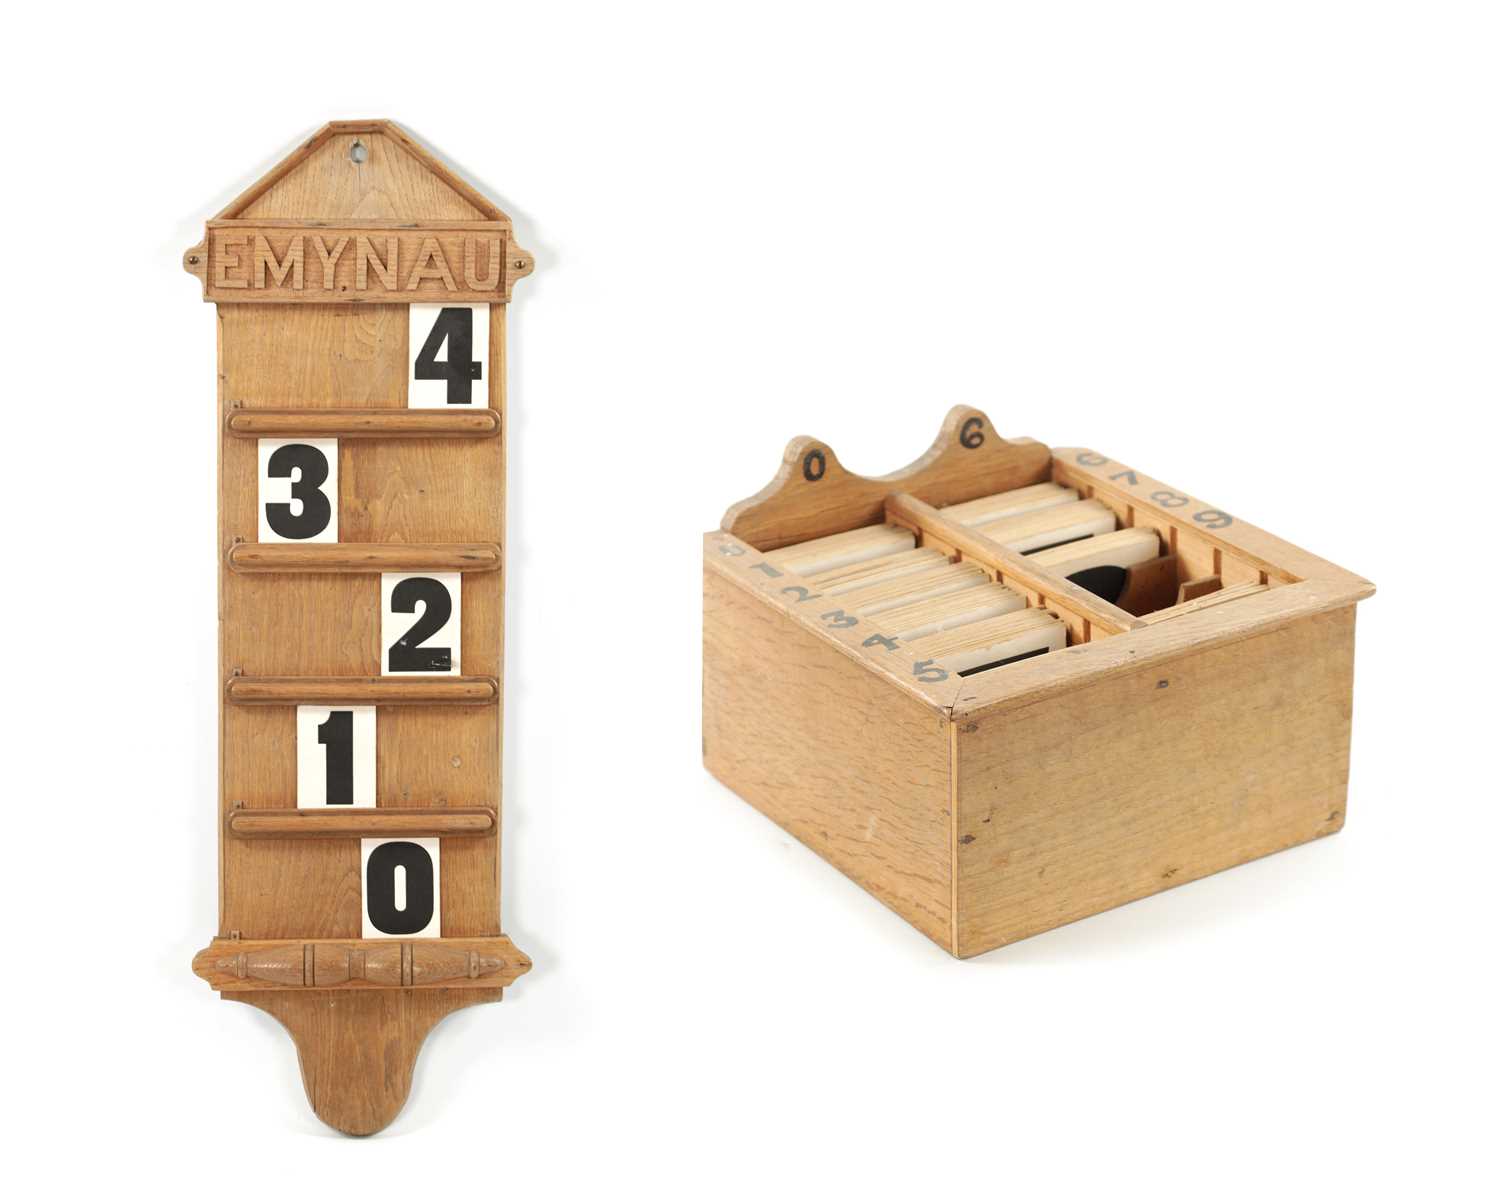 A WELSH HYMN NUMBER RACK (EMYNAU) INCLUDING BOX NUMBERS FROM CAPEL SARON LLANDDERFEL, WALES